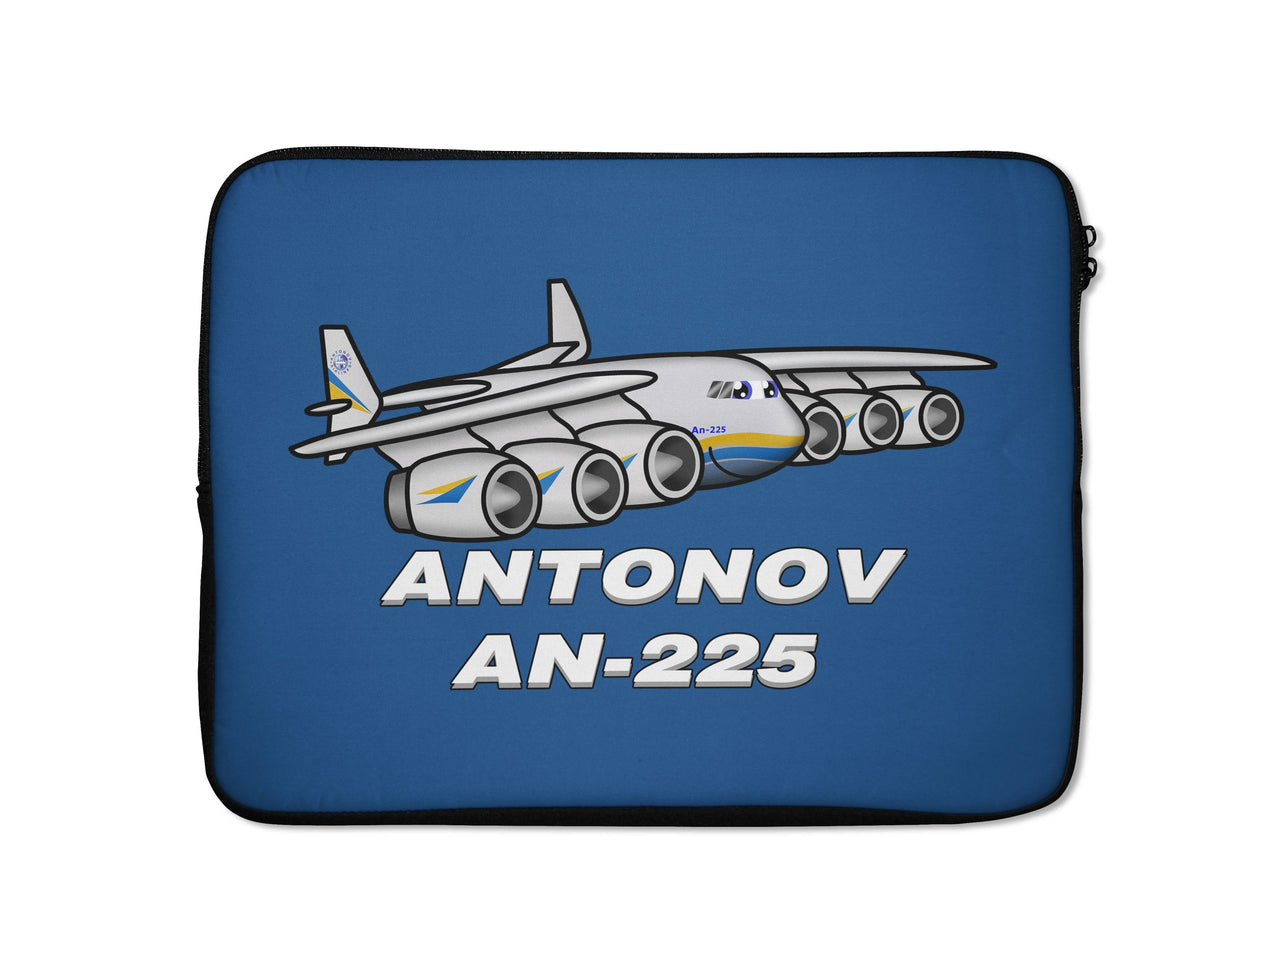 Antonov AN-225 (25) Designed Laptop & Tablet Cases